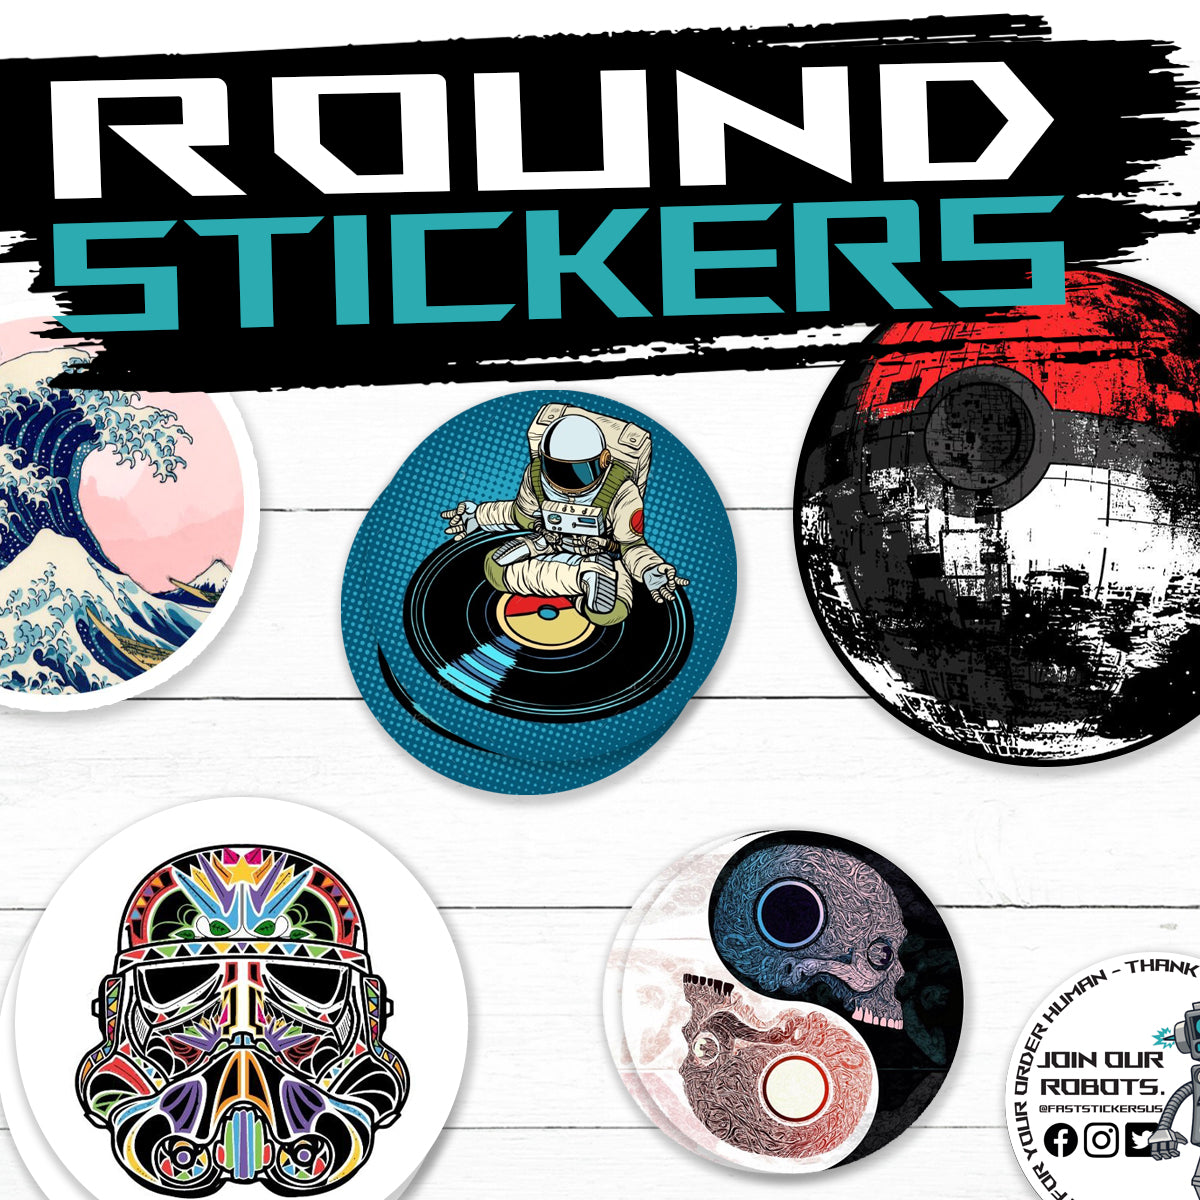 Create Sleek Matte Vinyl Stickers Online